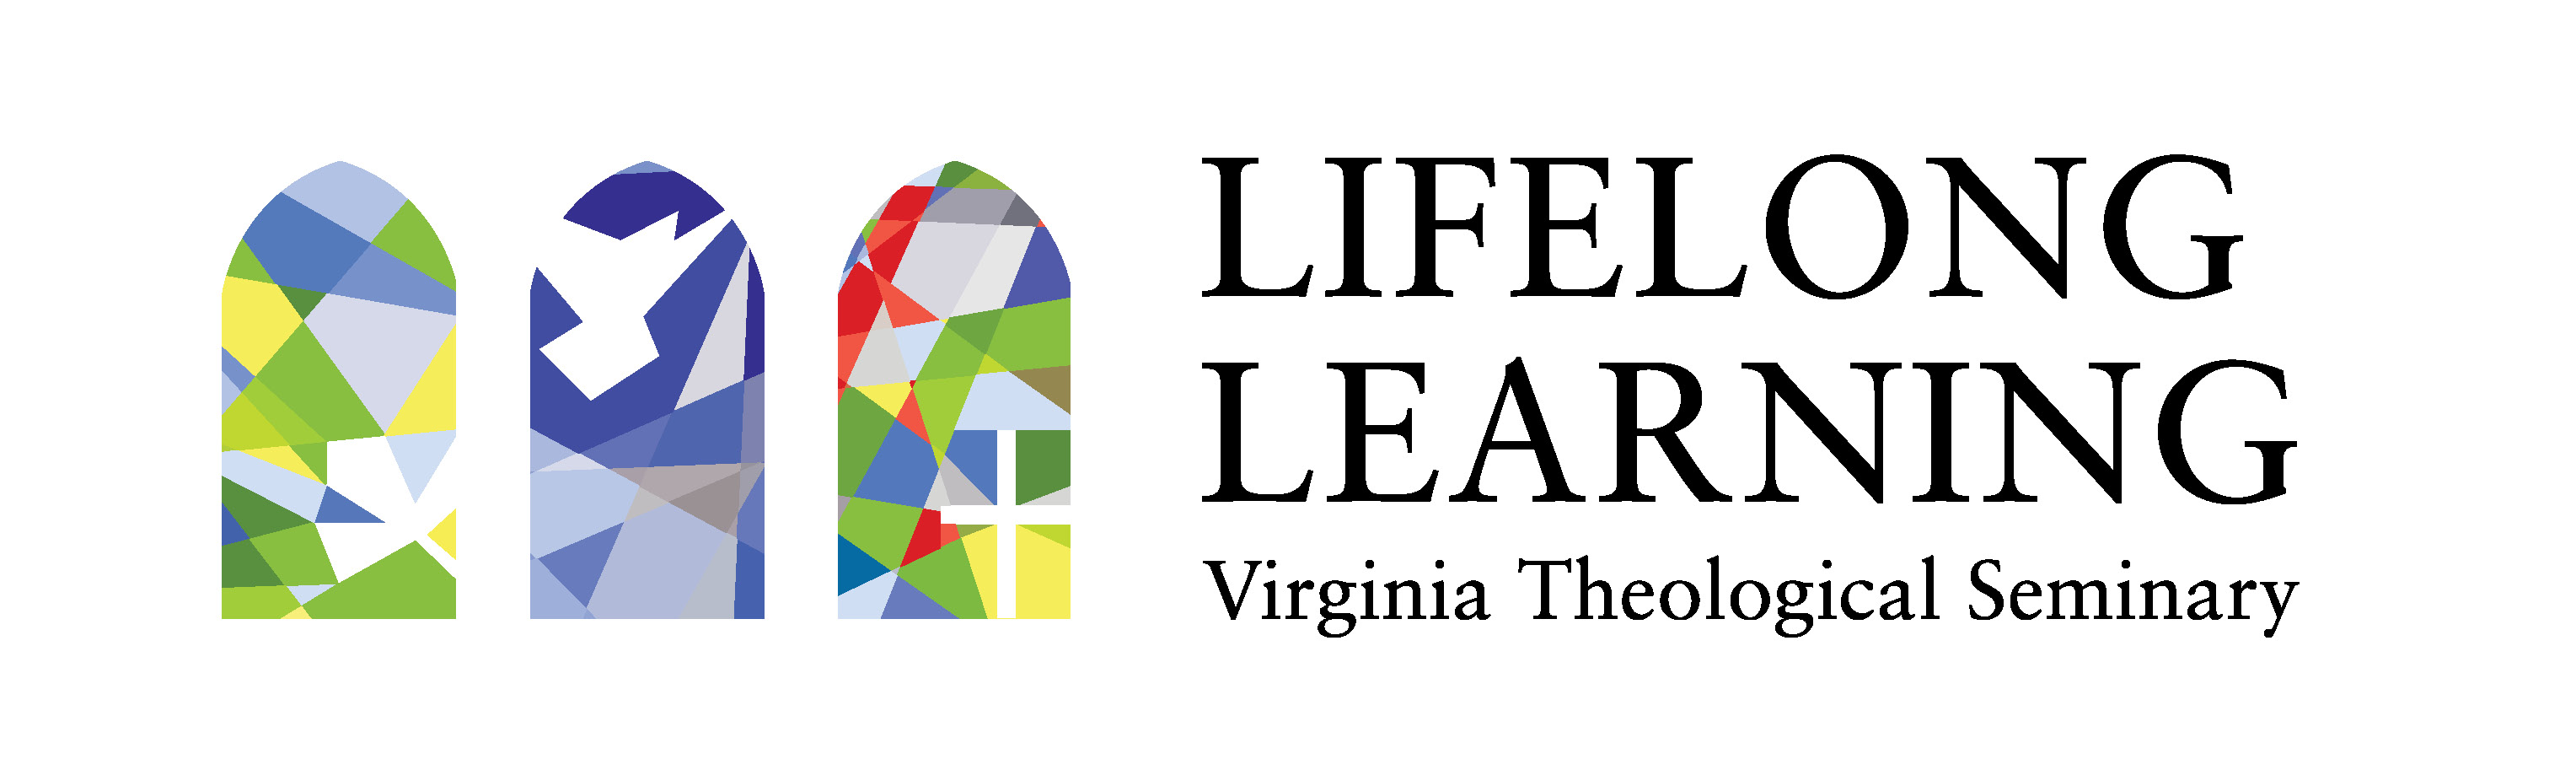 Lifelong Learning Virginia Theological Seminary logo with church windows